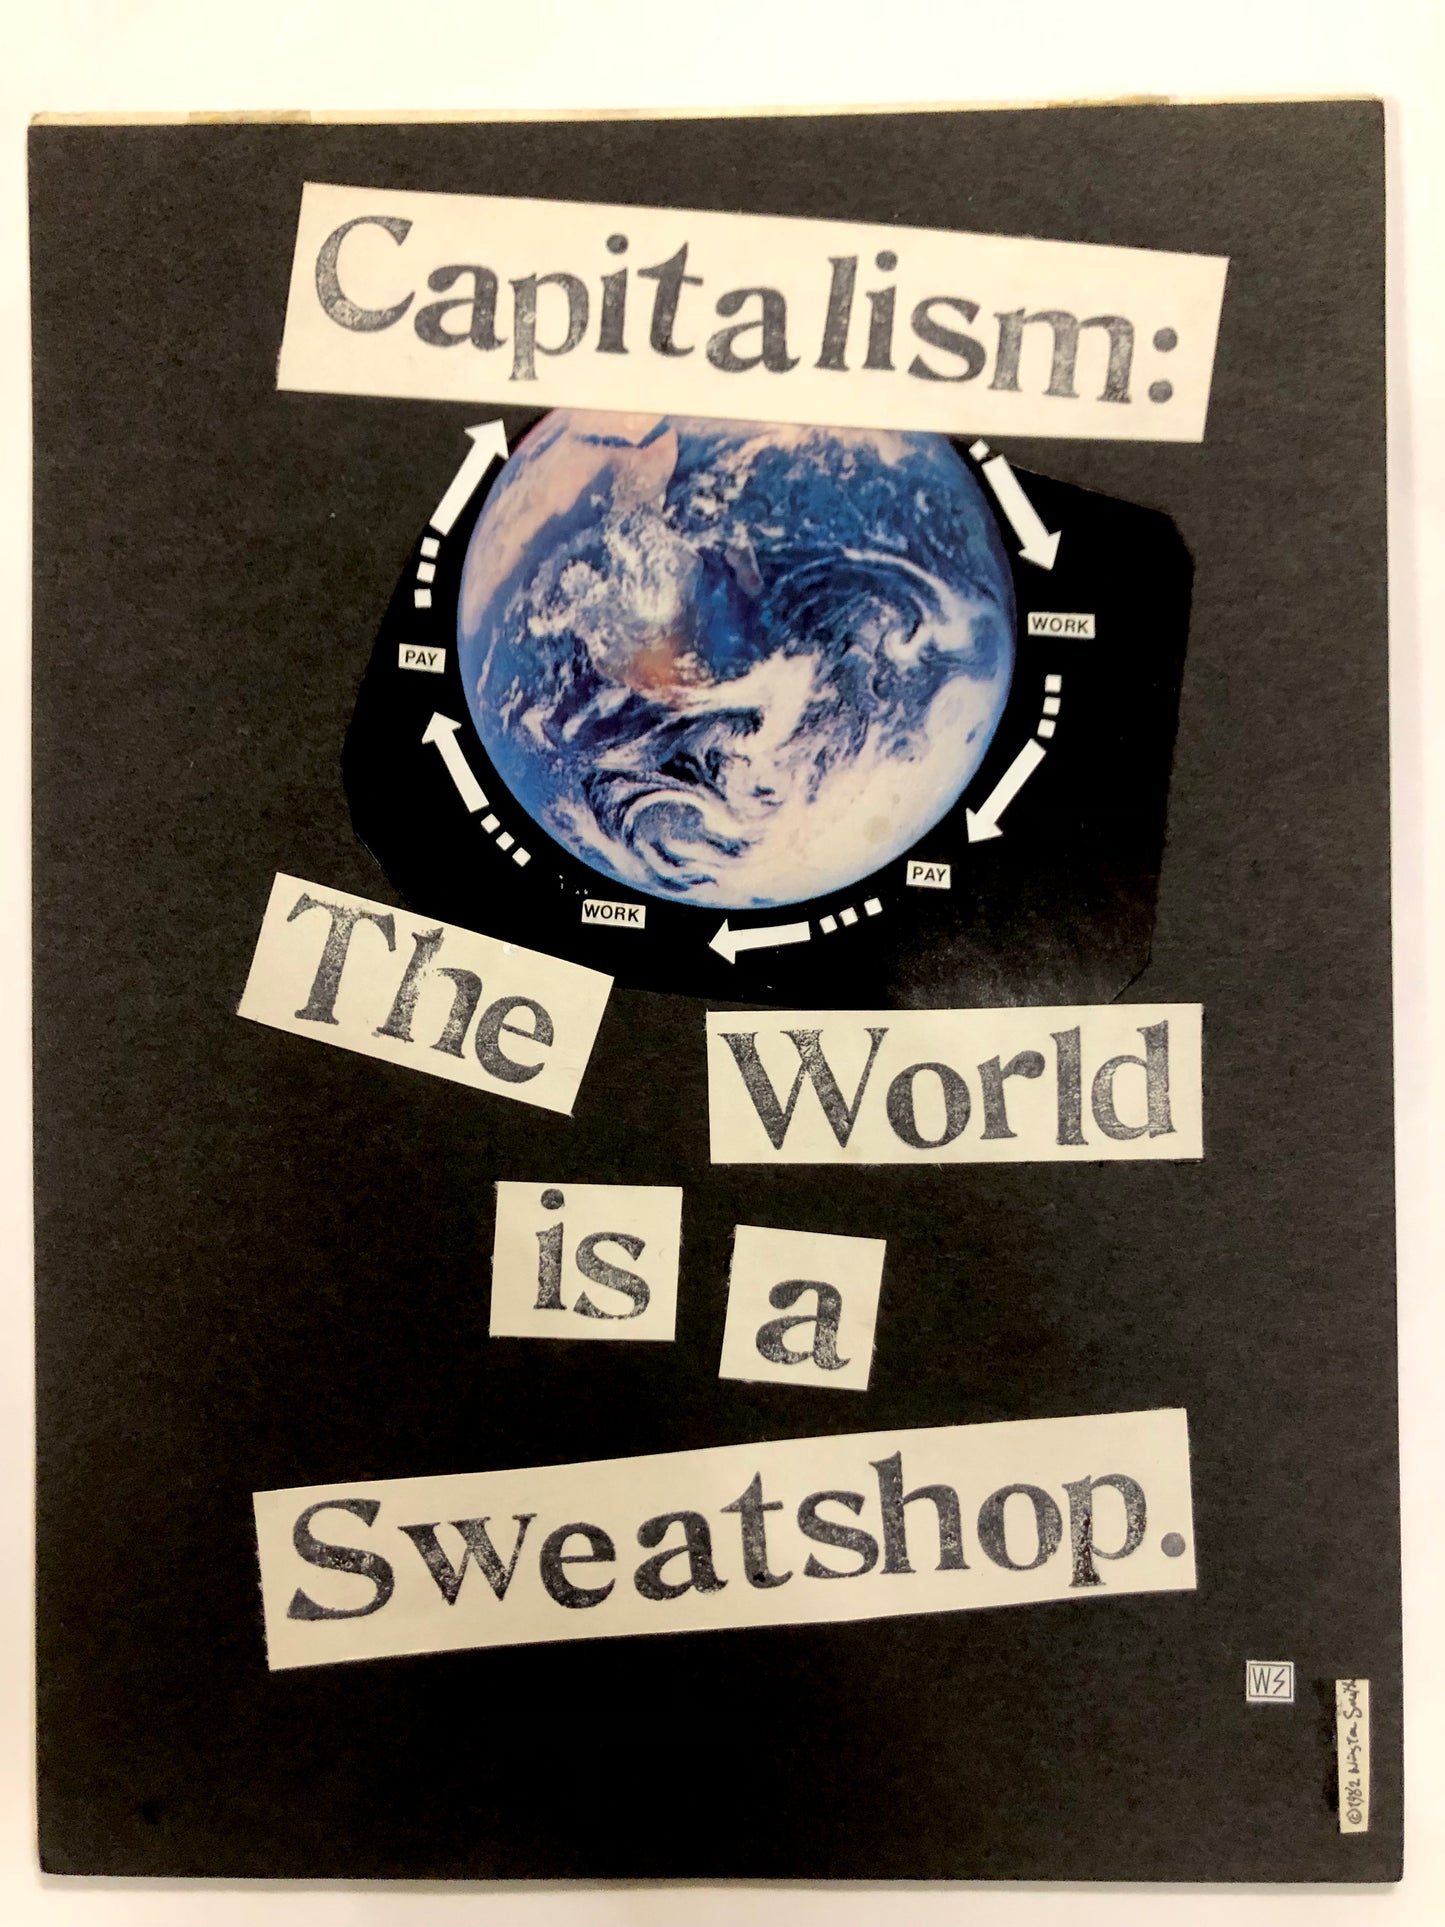 Winston Smith "The World is a Sweatshop" (1982)